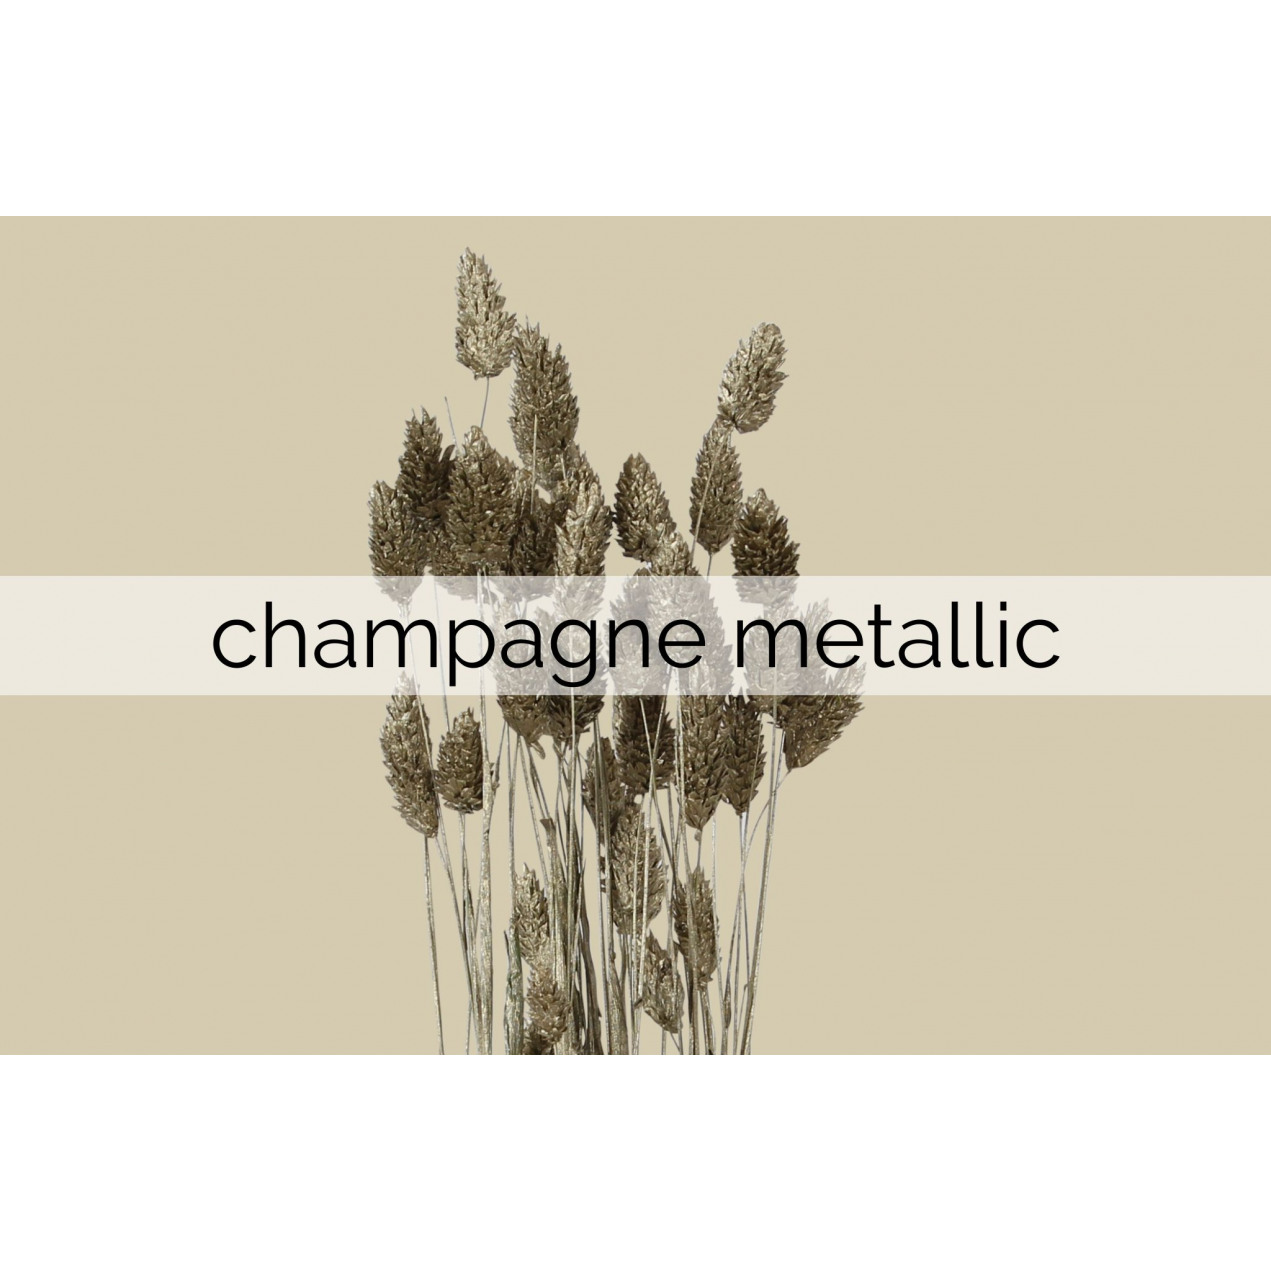 champagne metallic